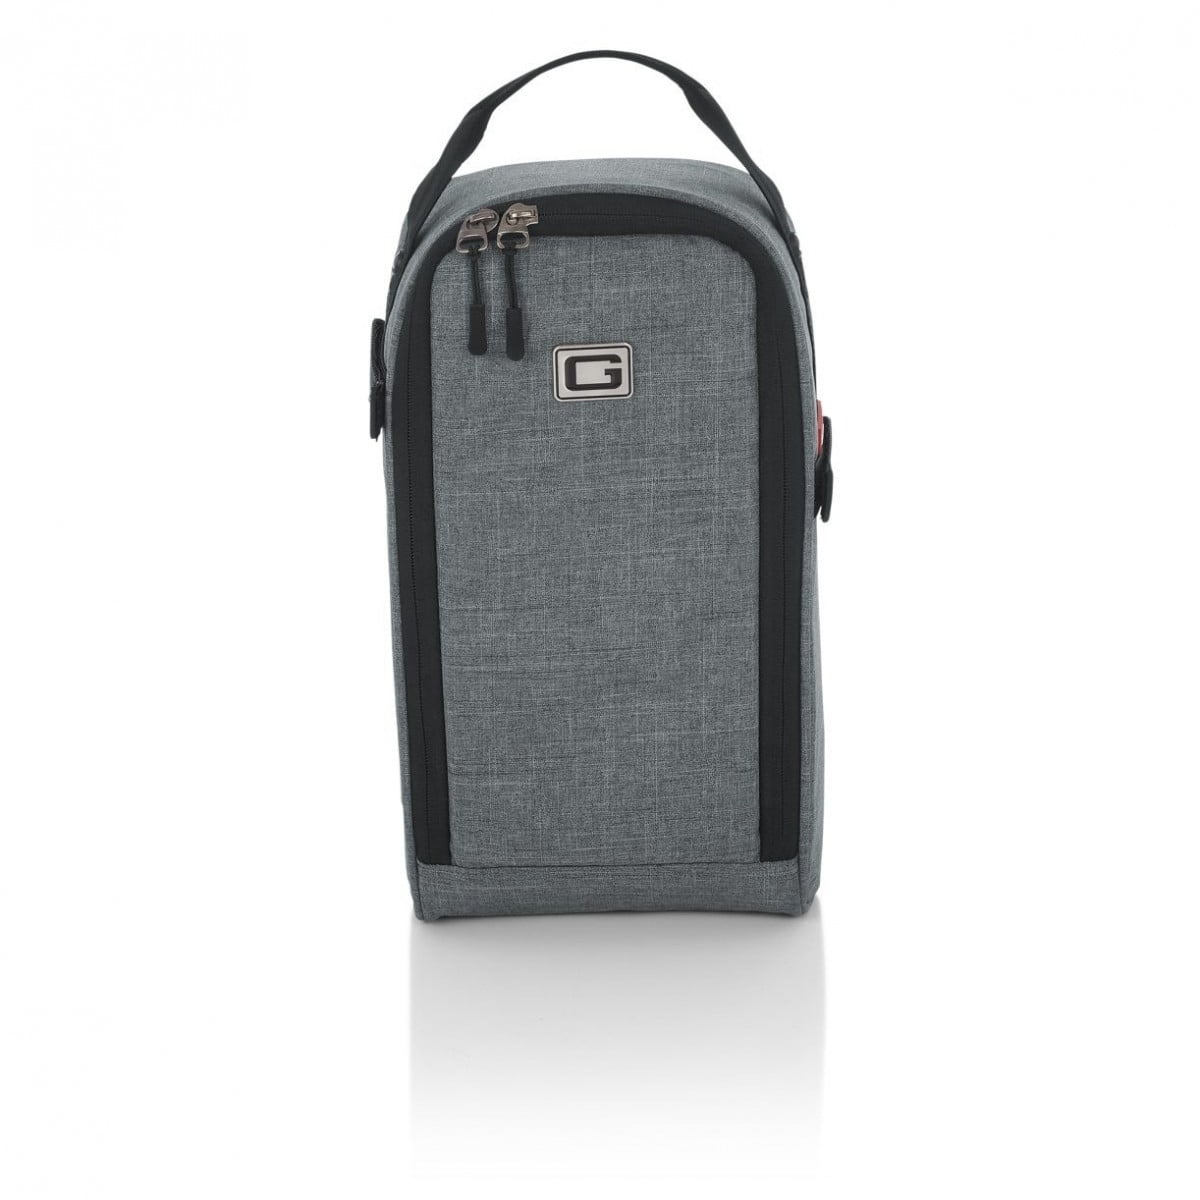 Gator GT-1407-GRY Transit add-on accessory bag for guitar gear - New Gator      Looper             Guitar Effect Pedal